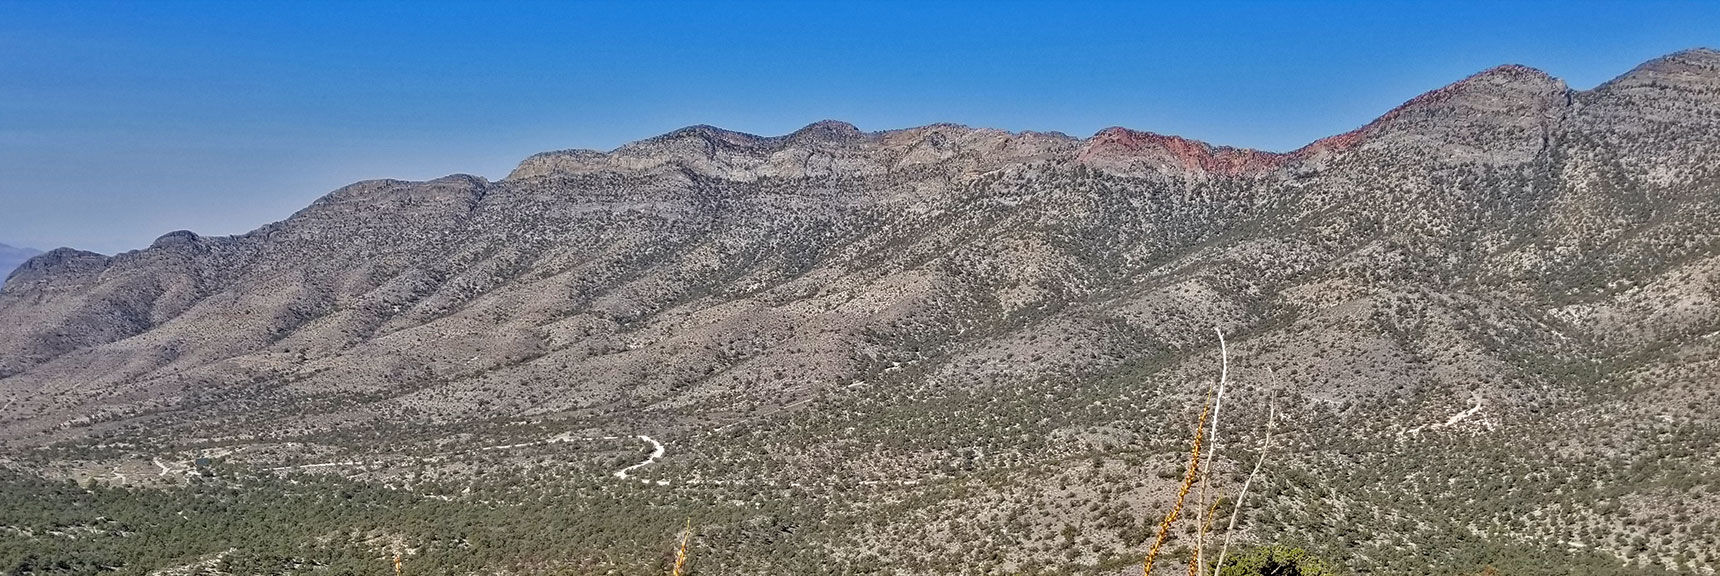 View Across Potosi Canyon from Popular Summit Approach Ridge | Potosi Mountain Northwestern Approach, Spring Mountains, Nevada